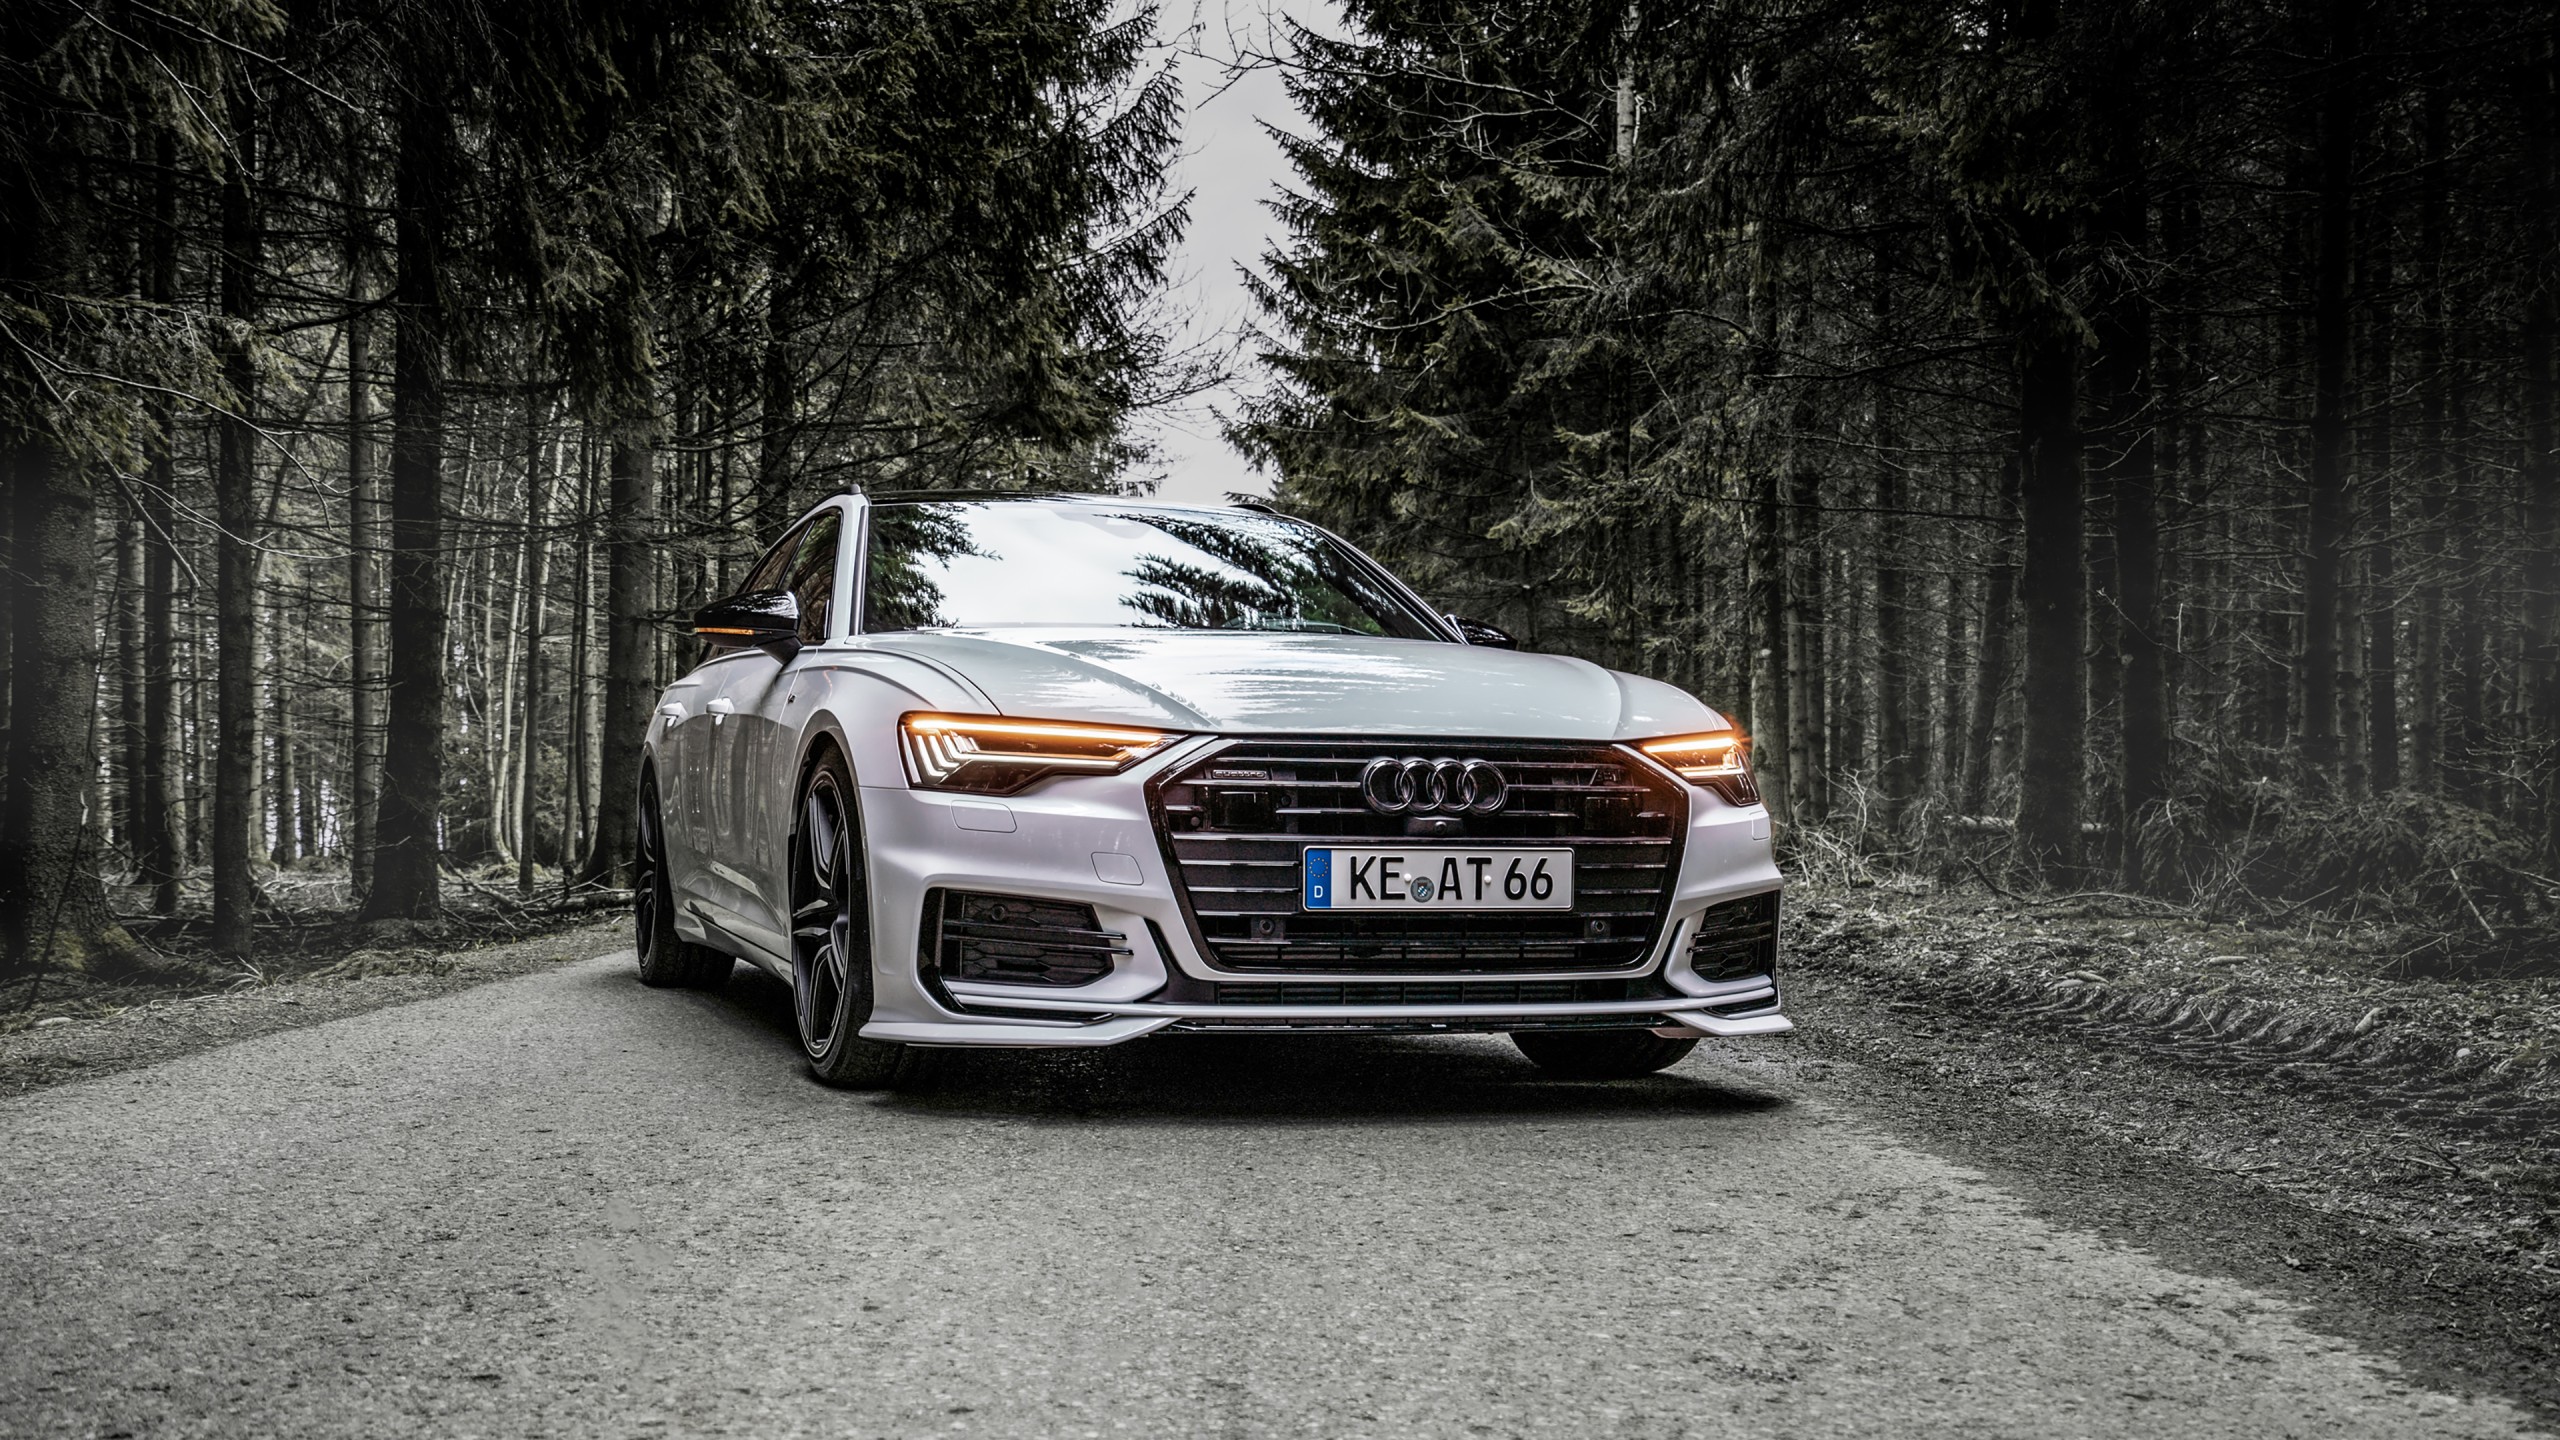 ABT Audi A6 3.0 TDI Avant 2019 4K Wallpaper | HD Car Wallpapers | ID #13335